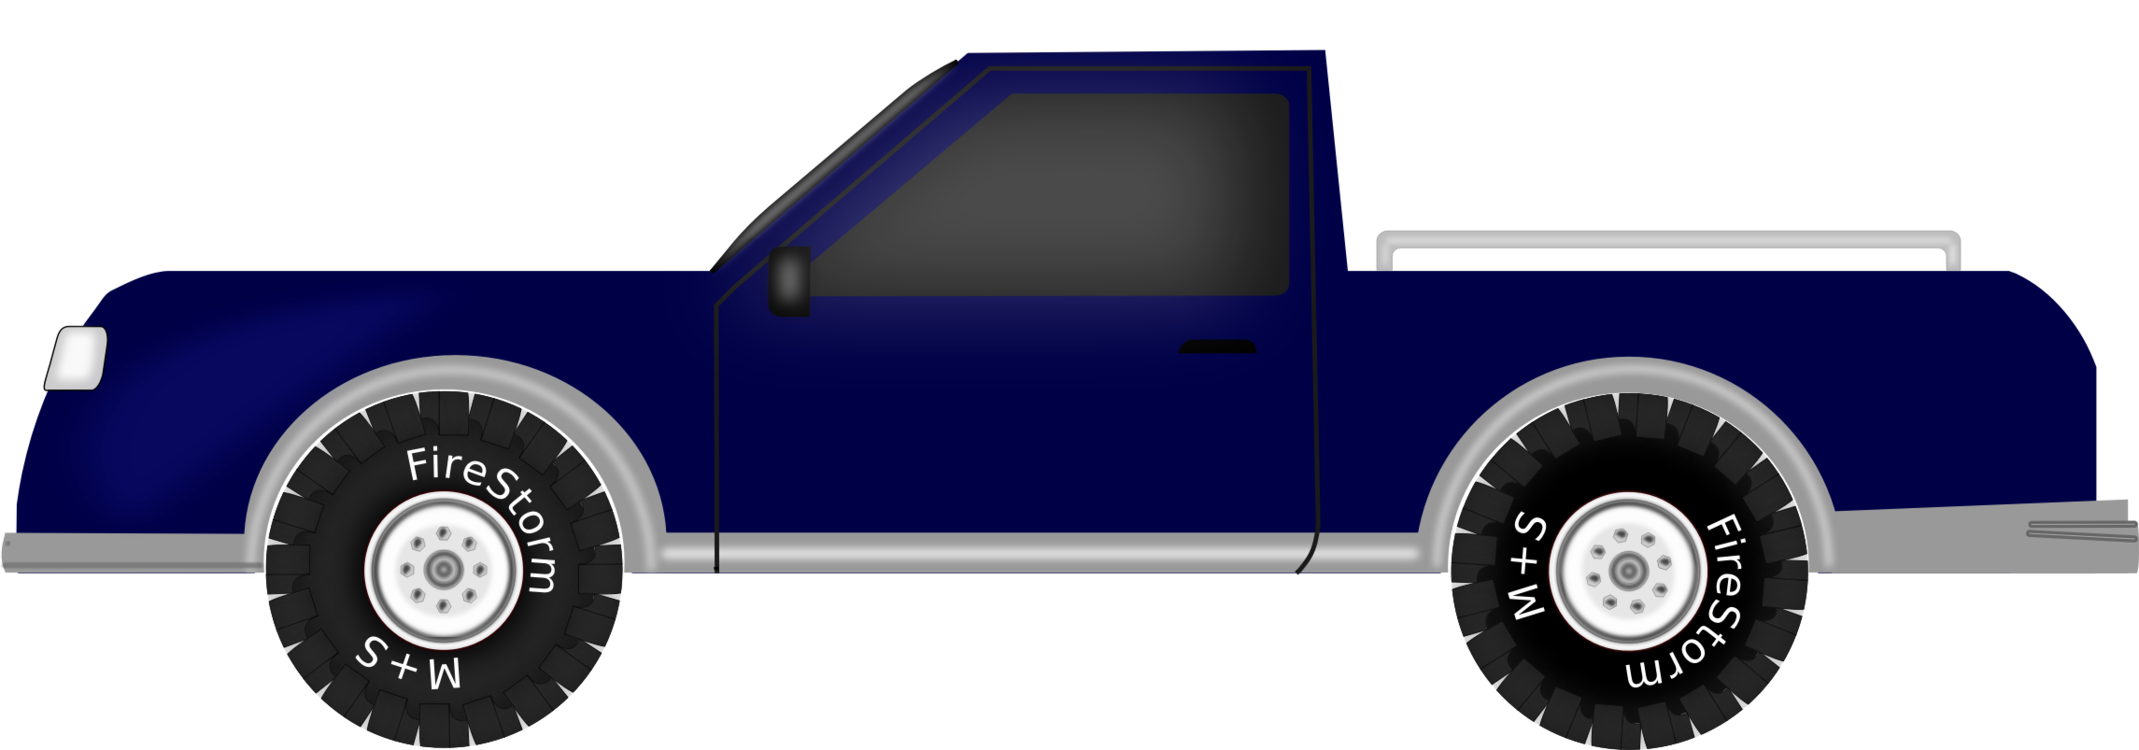 Blue,Wheel,Automotive Exterior